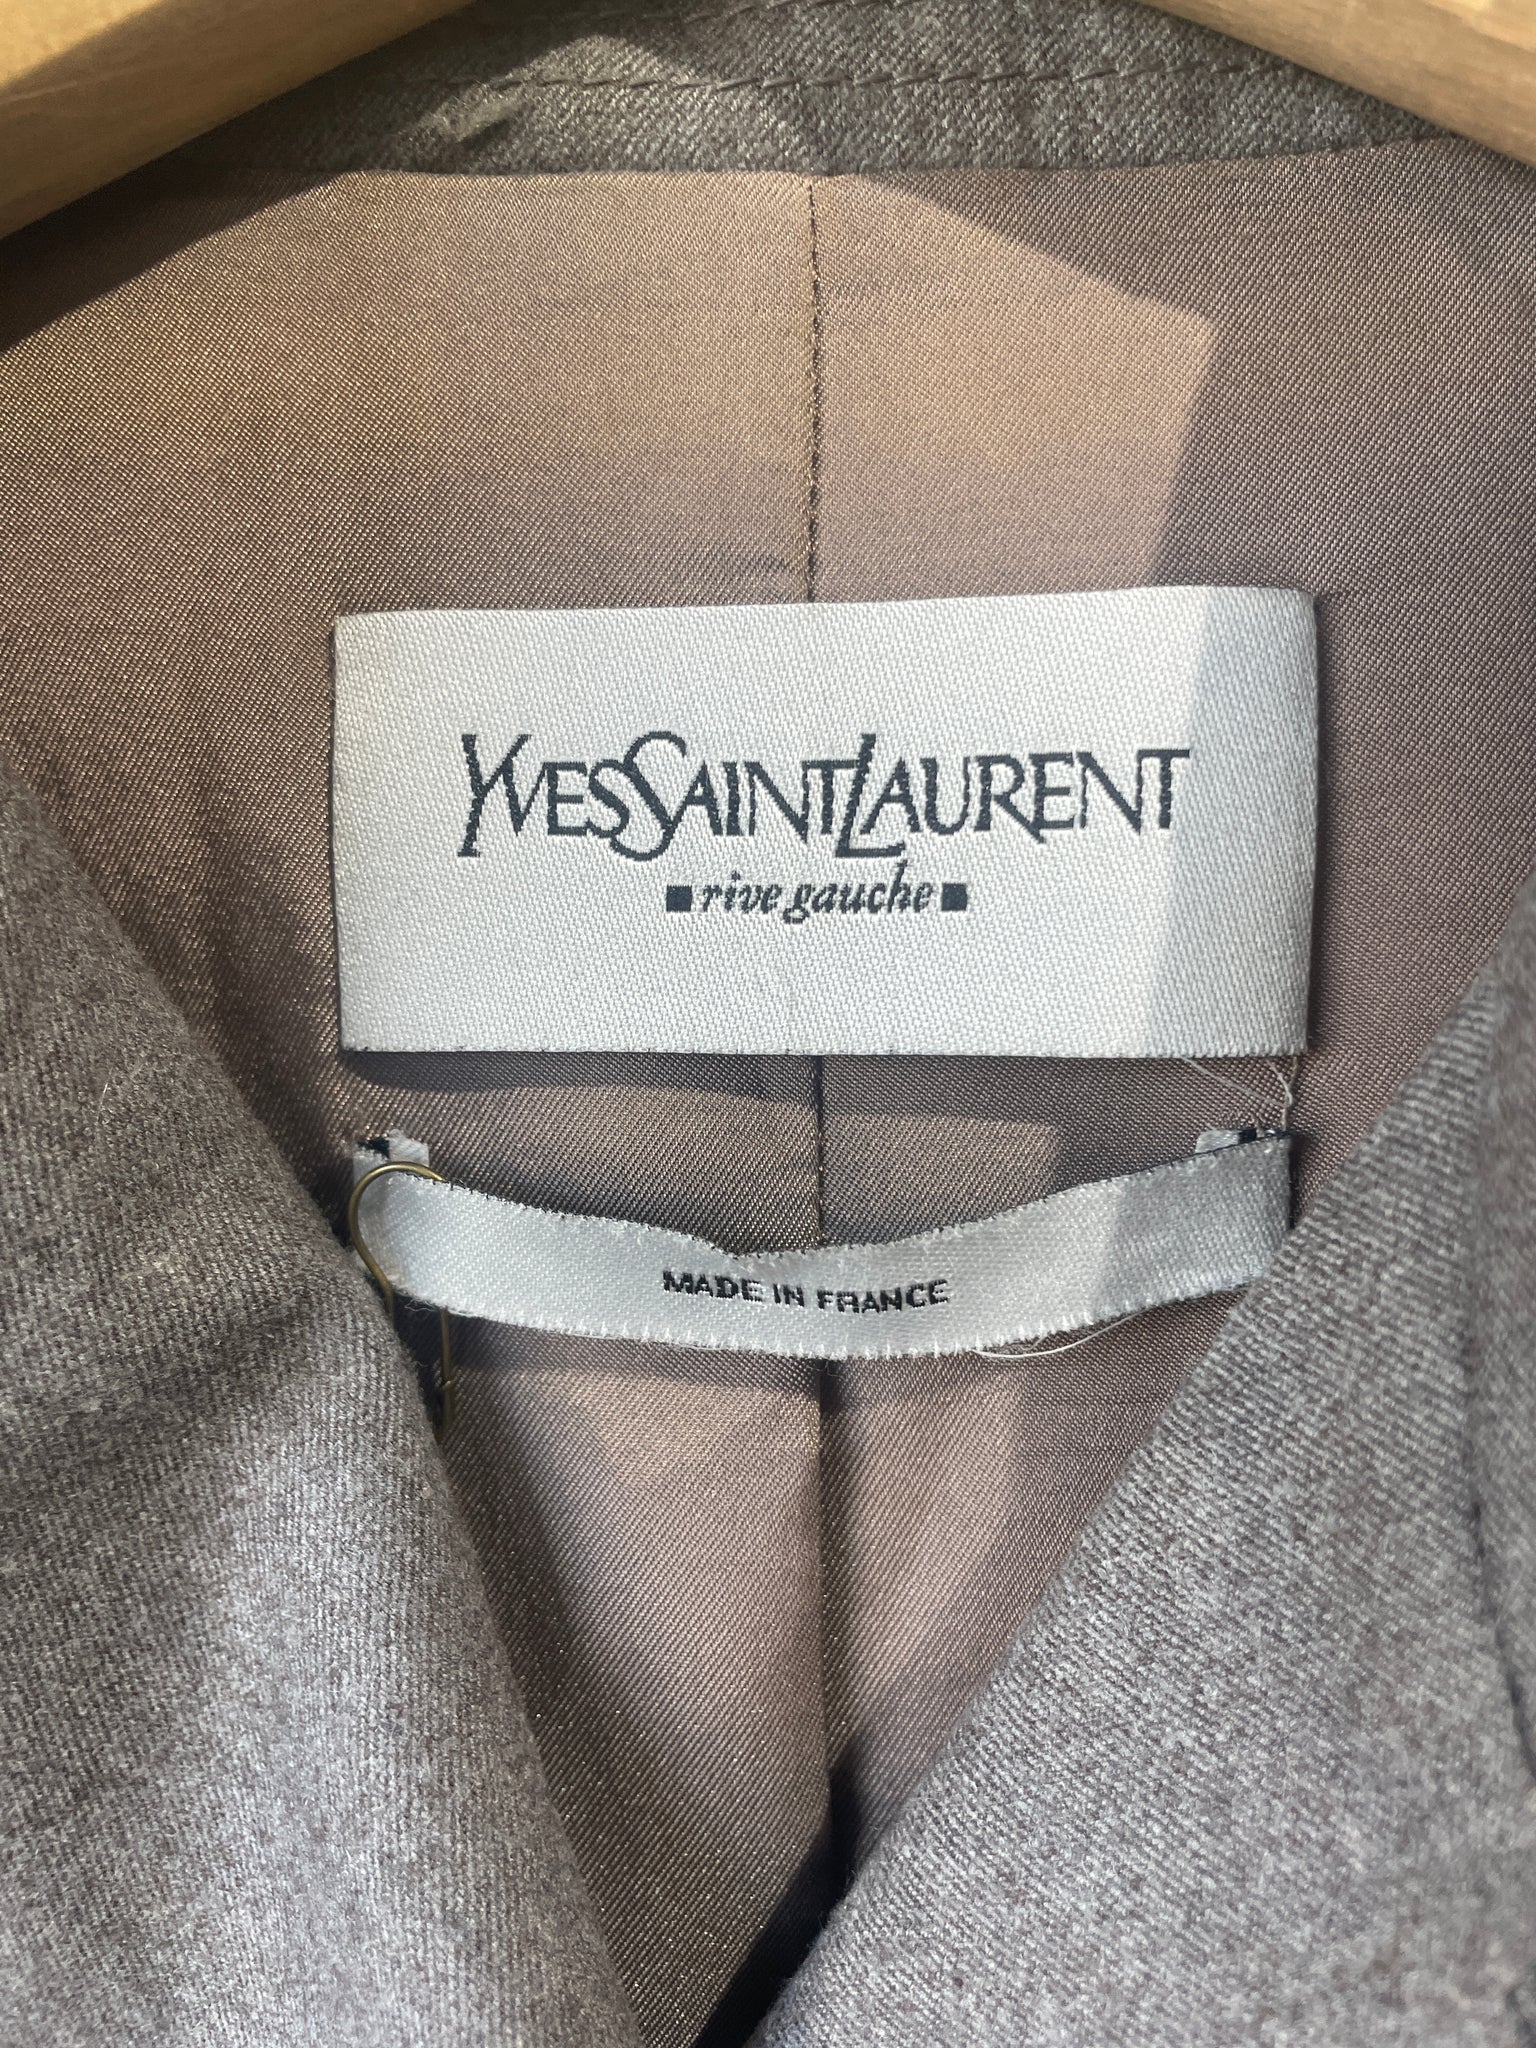 The Curatorial Dept. Yves Saint Laurent Rive Gauche Jacket